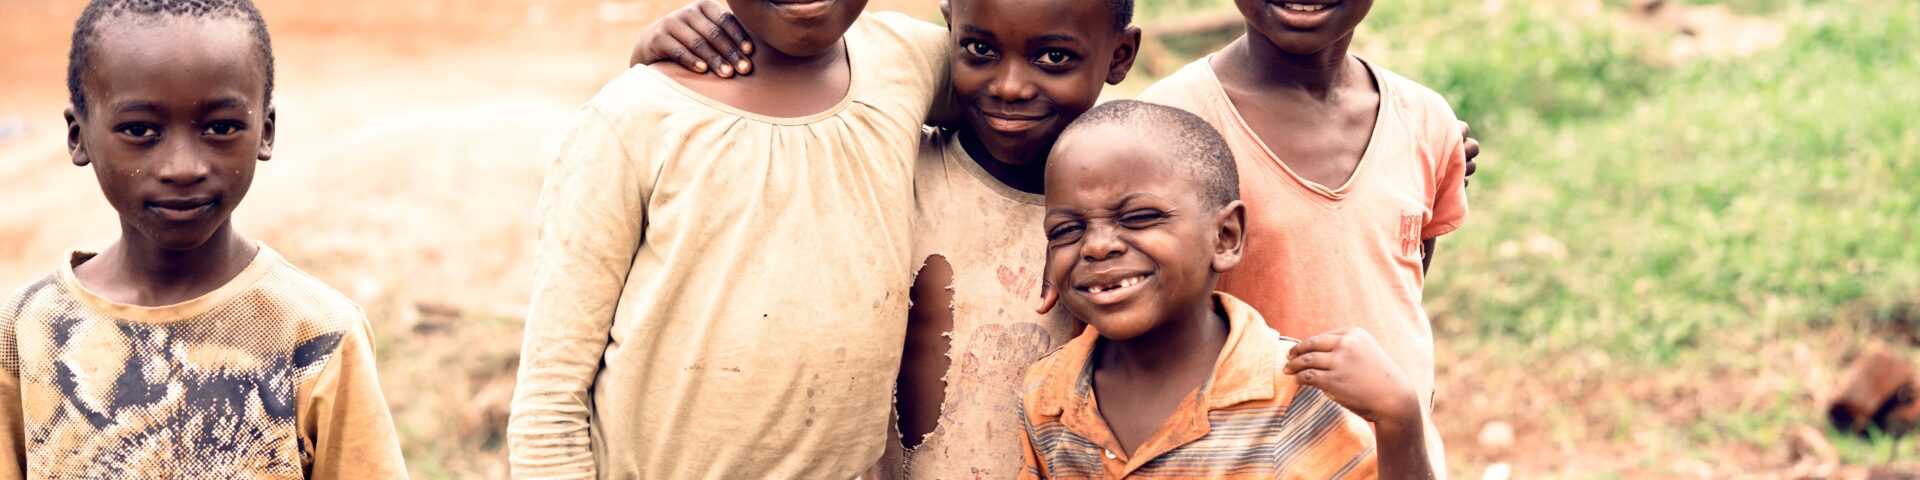 africke deti